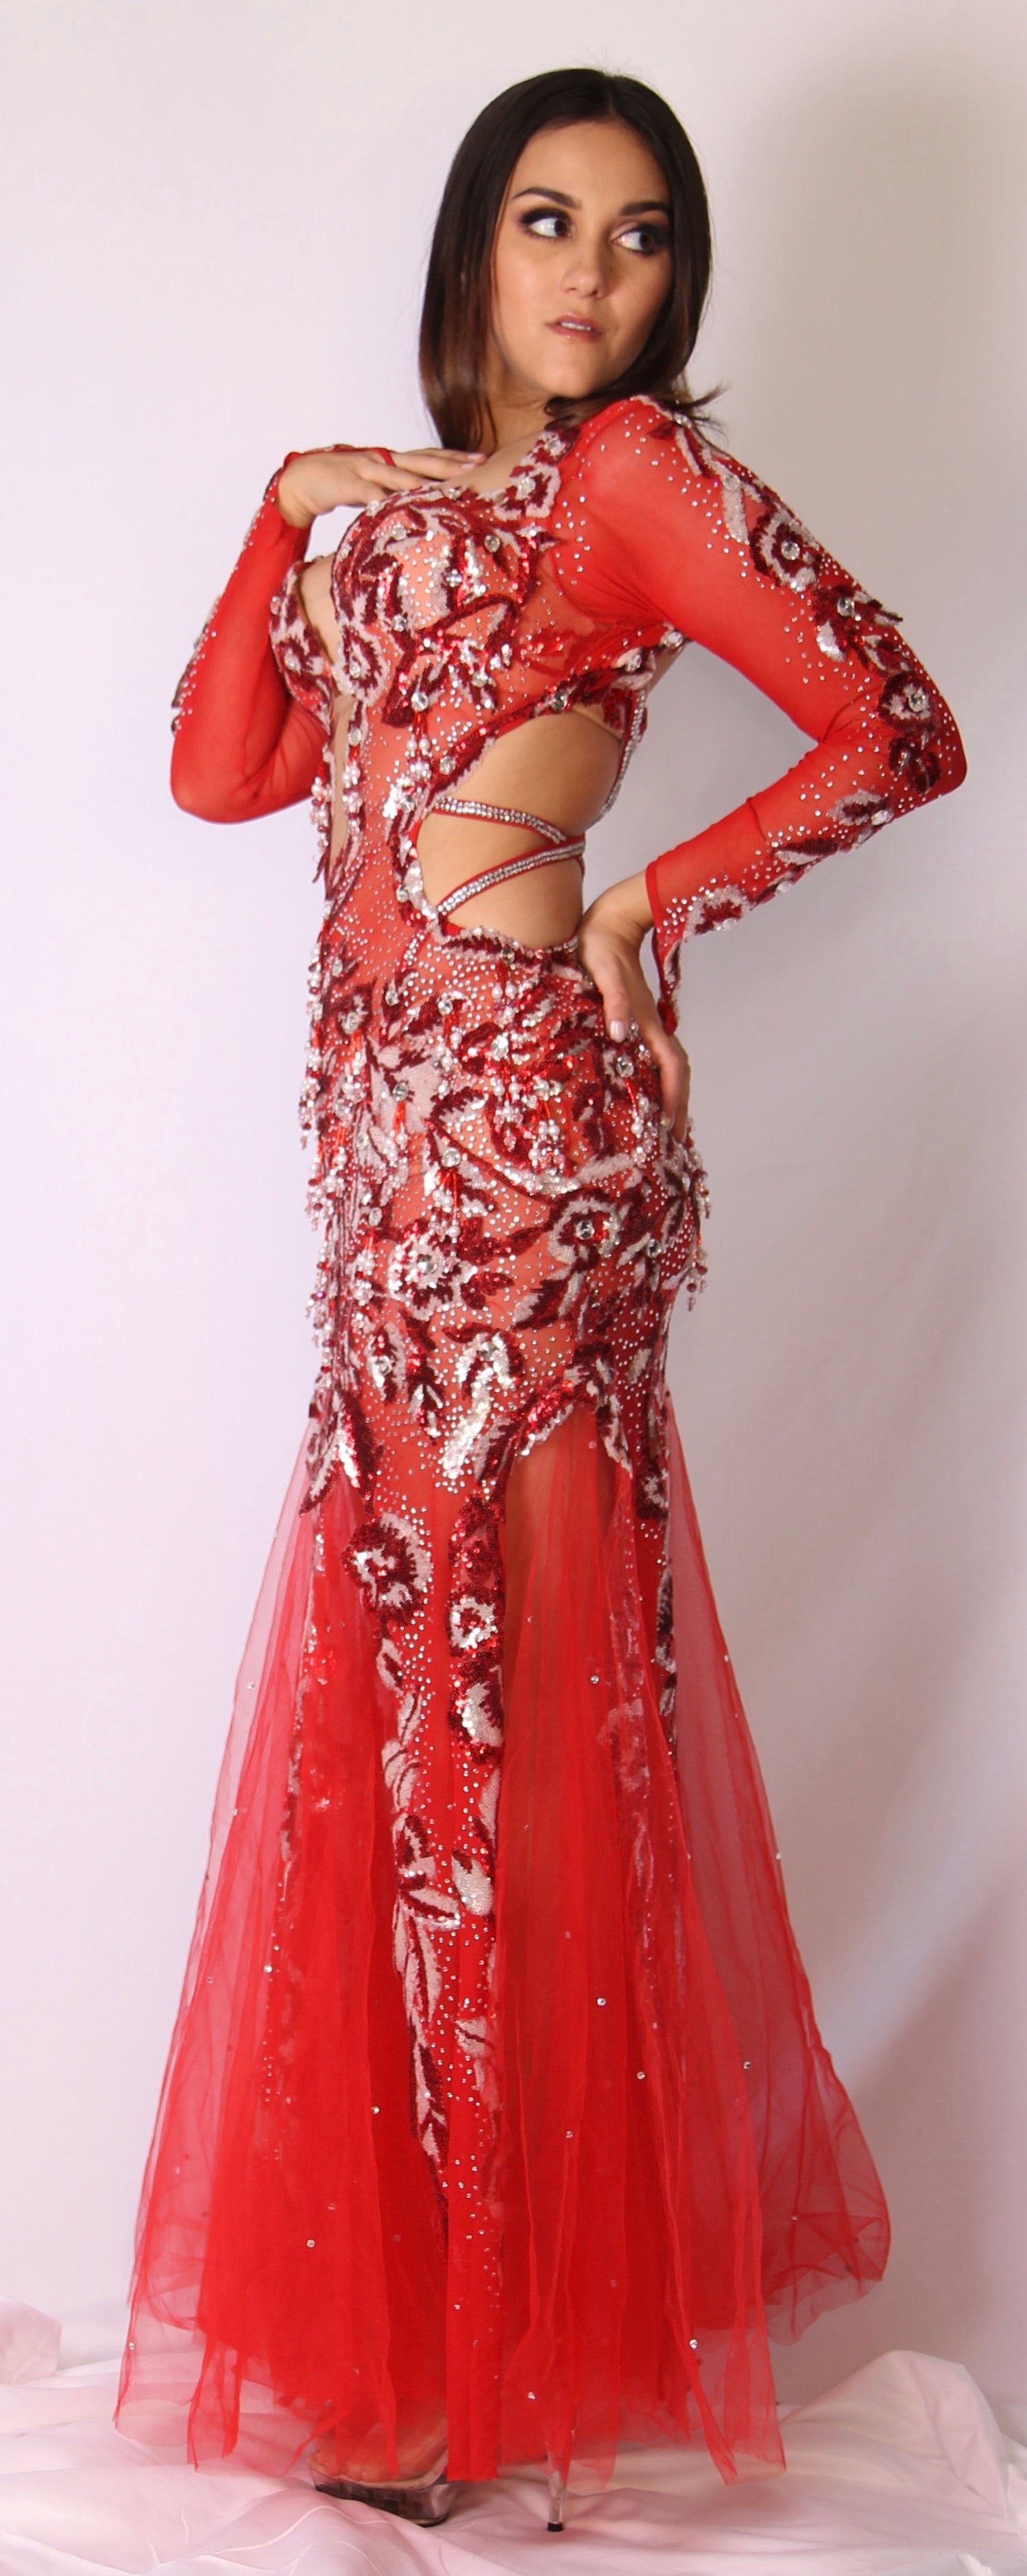 Eman Zaki  Costume Sale 25099